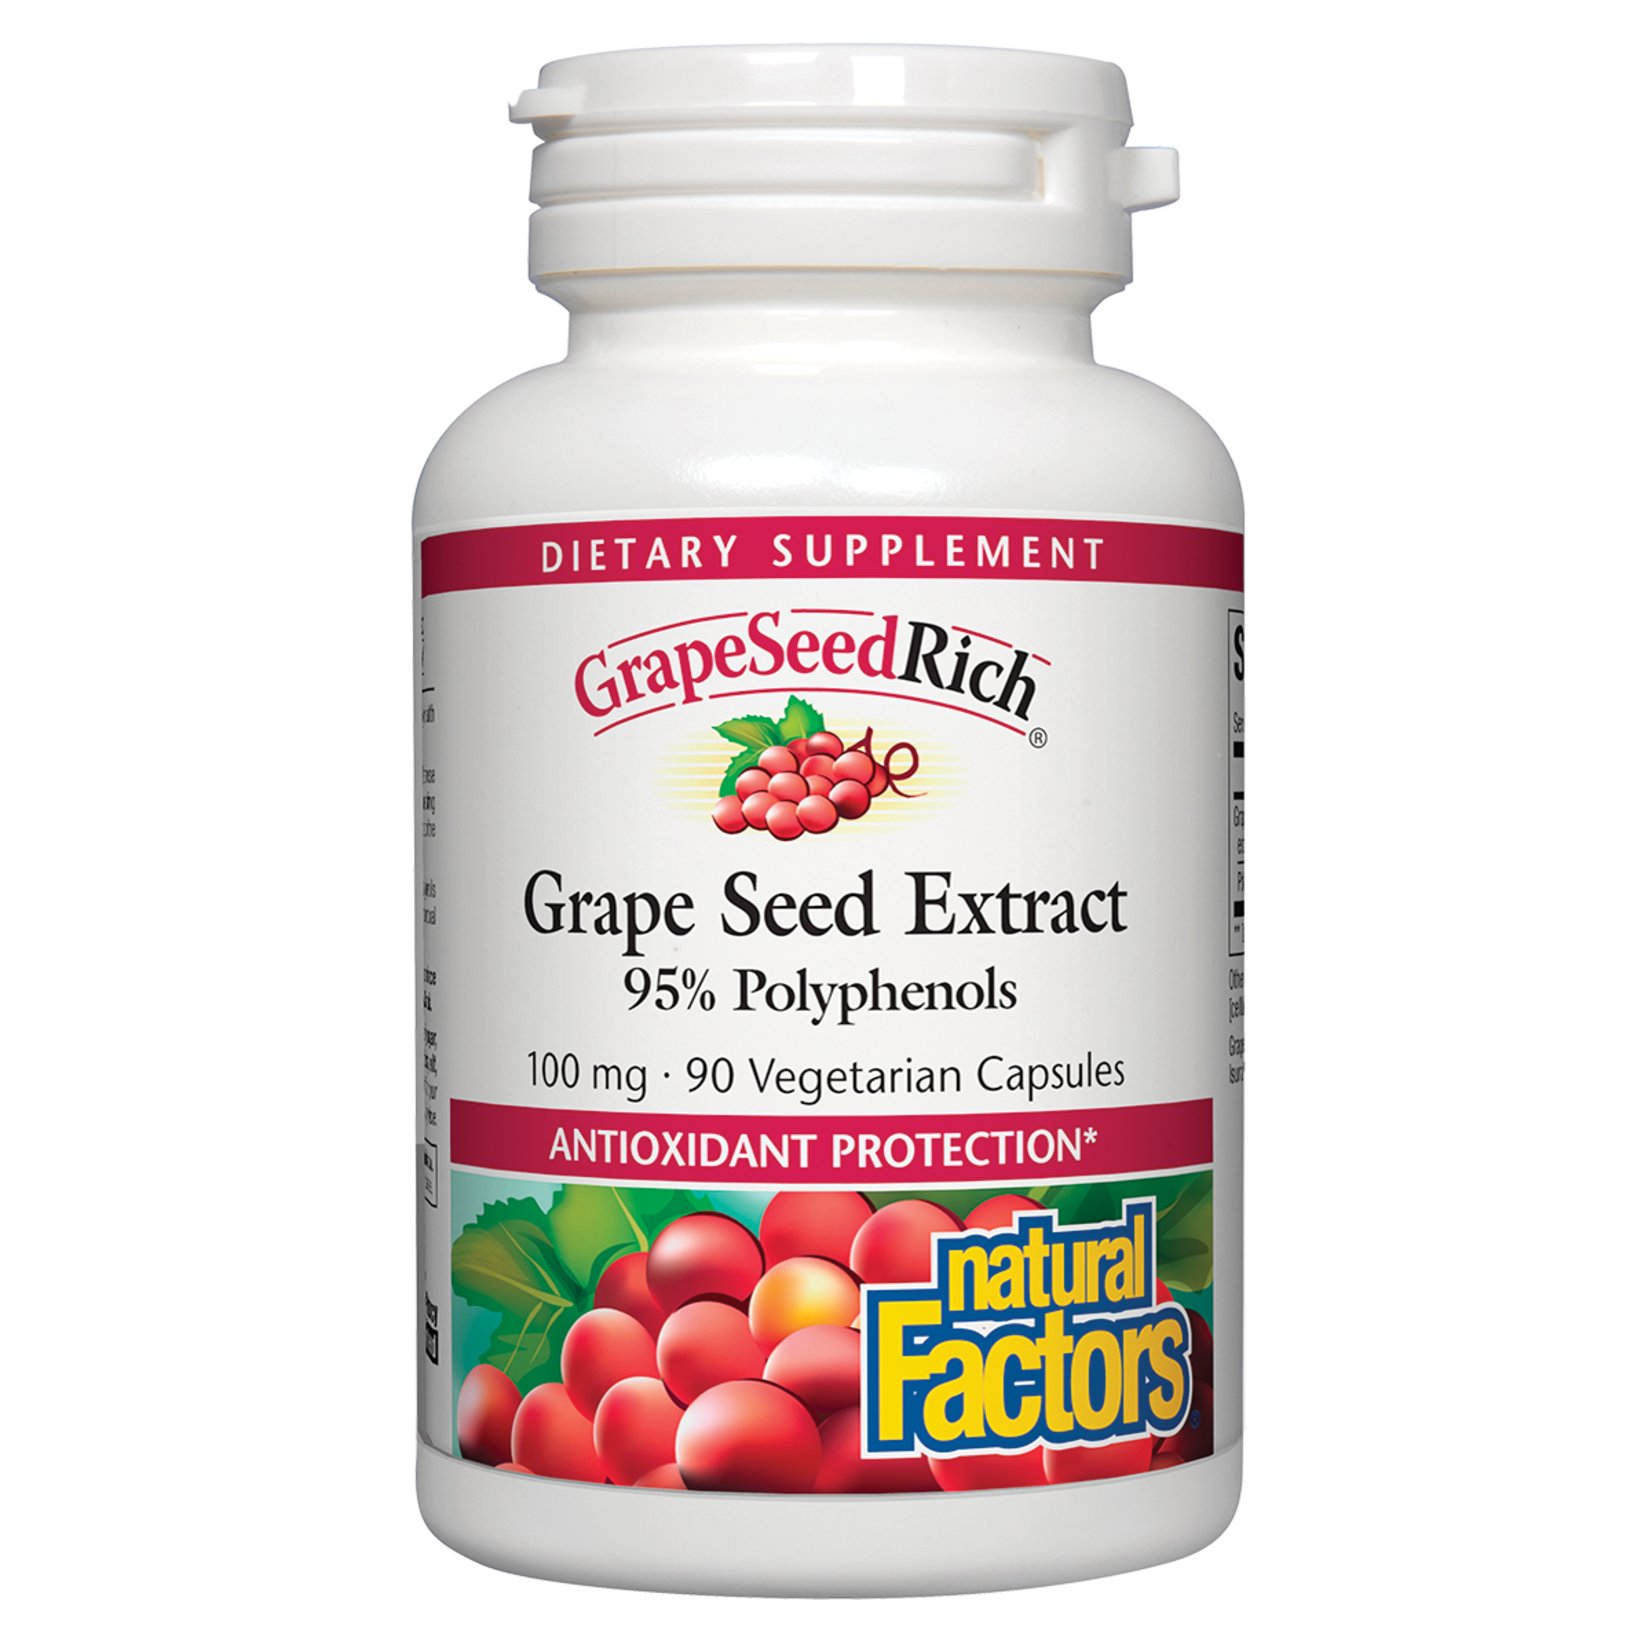 Natural Factors Natural Factors - Grapeseedrich 100 mg 95% Polyphenols - 90 Capsules